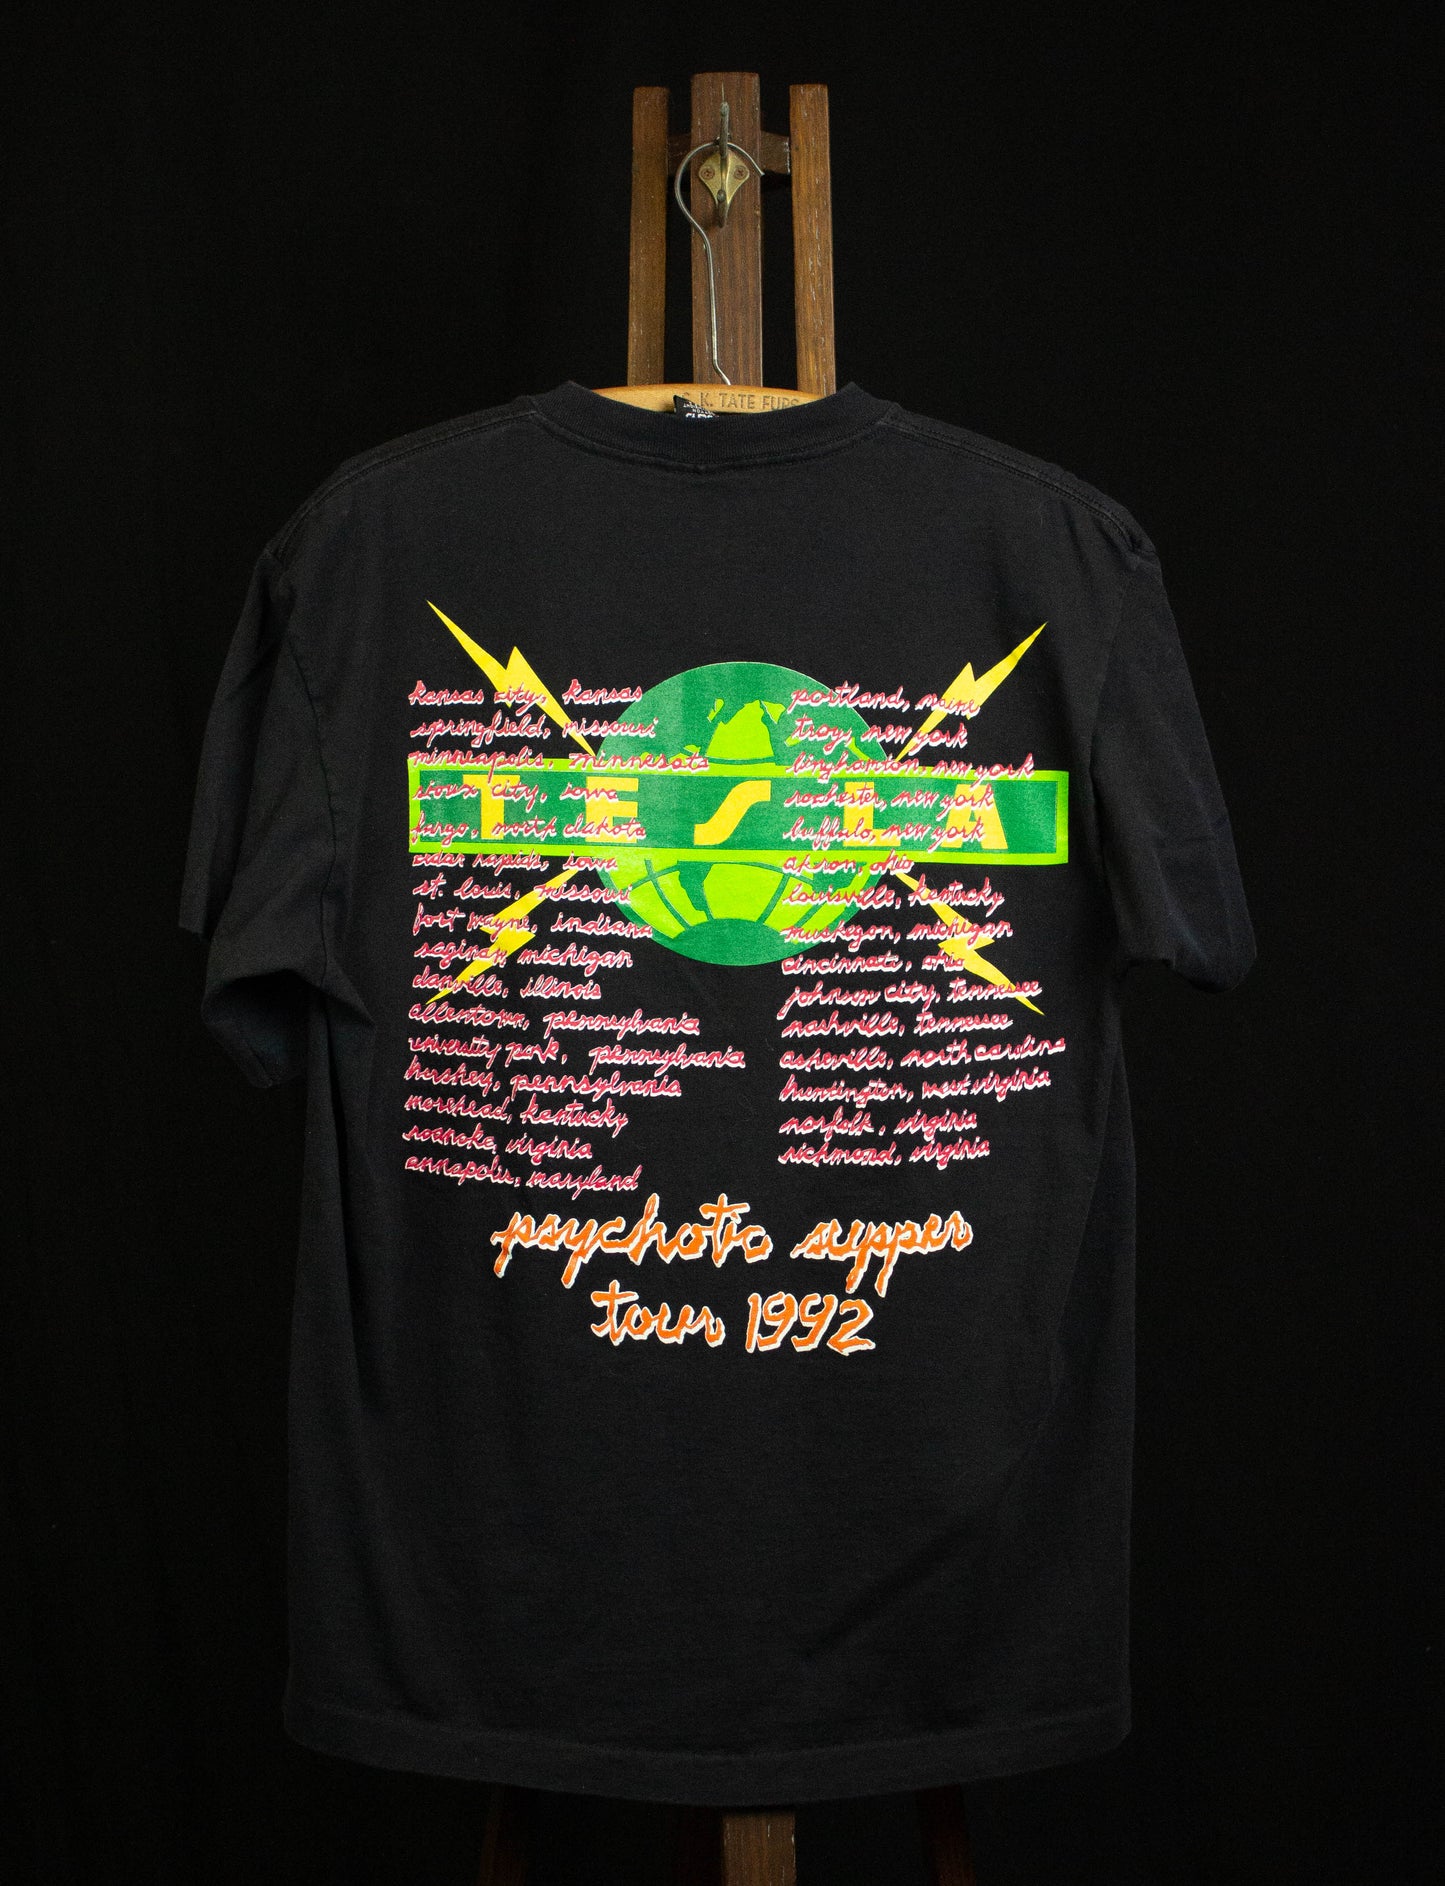 Vintage 1992 Tesla Live Psychotic Supper Tour Concert T Shirt Black XL